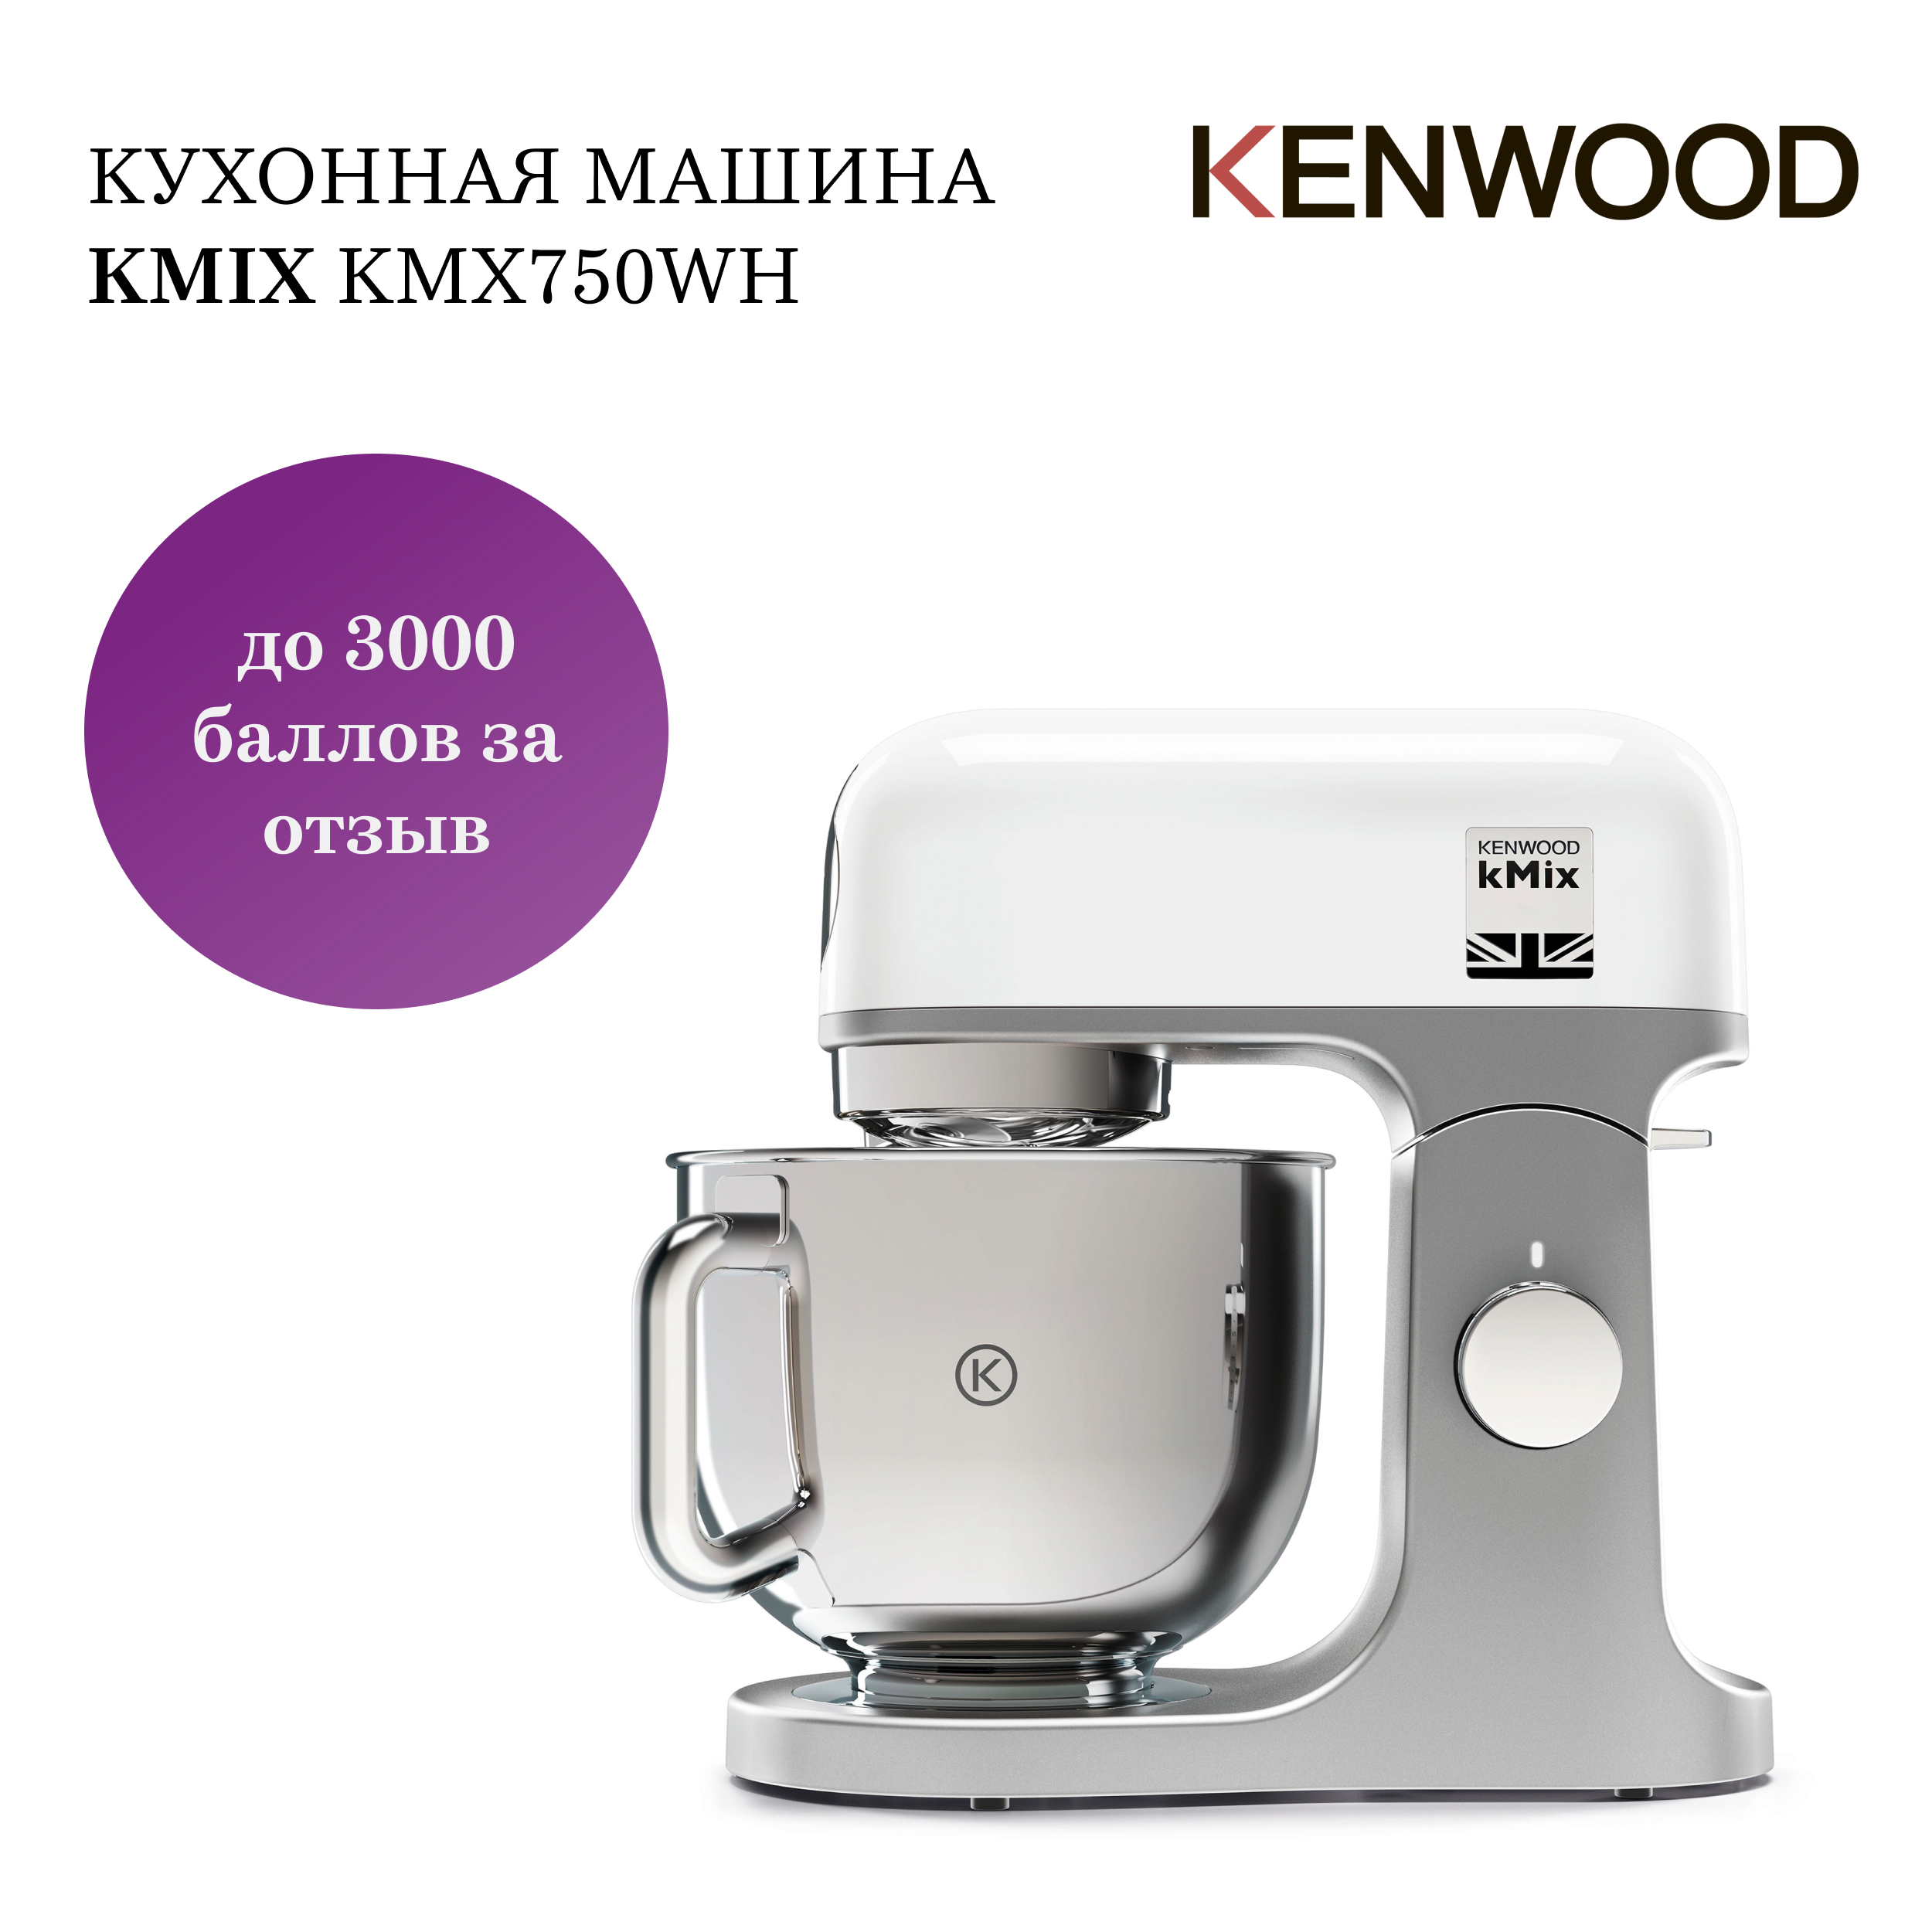 Кухонная машина Kenwood kMix KMX750WH